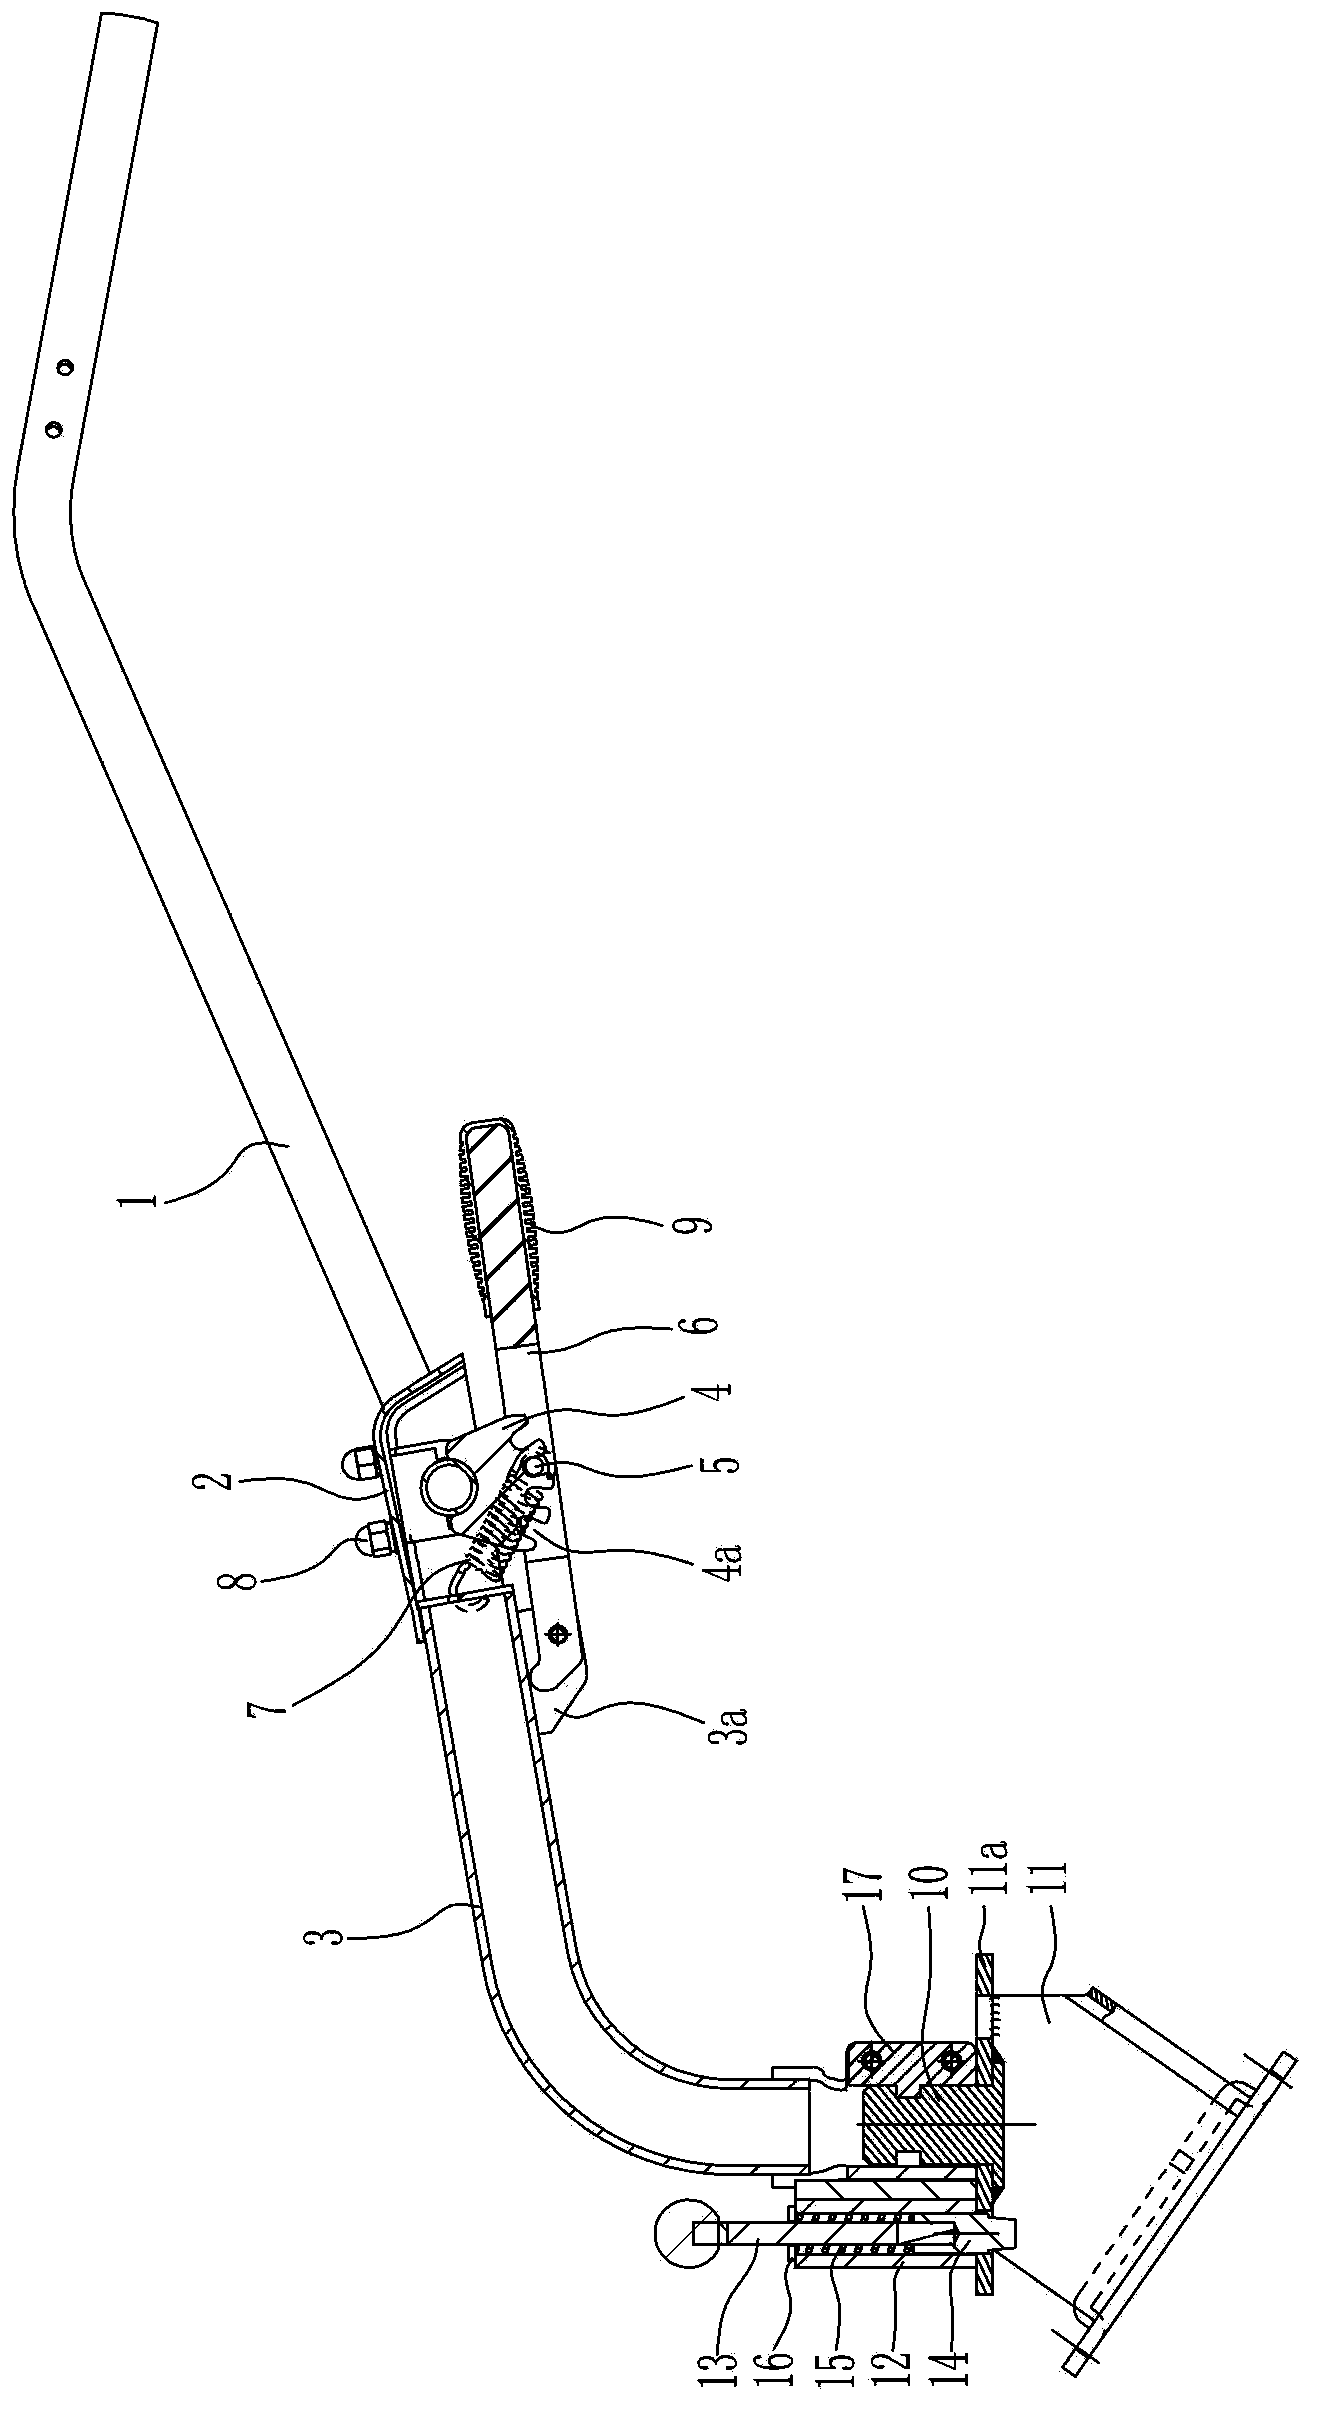 Bending handrail assembly of minitiller